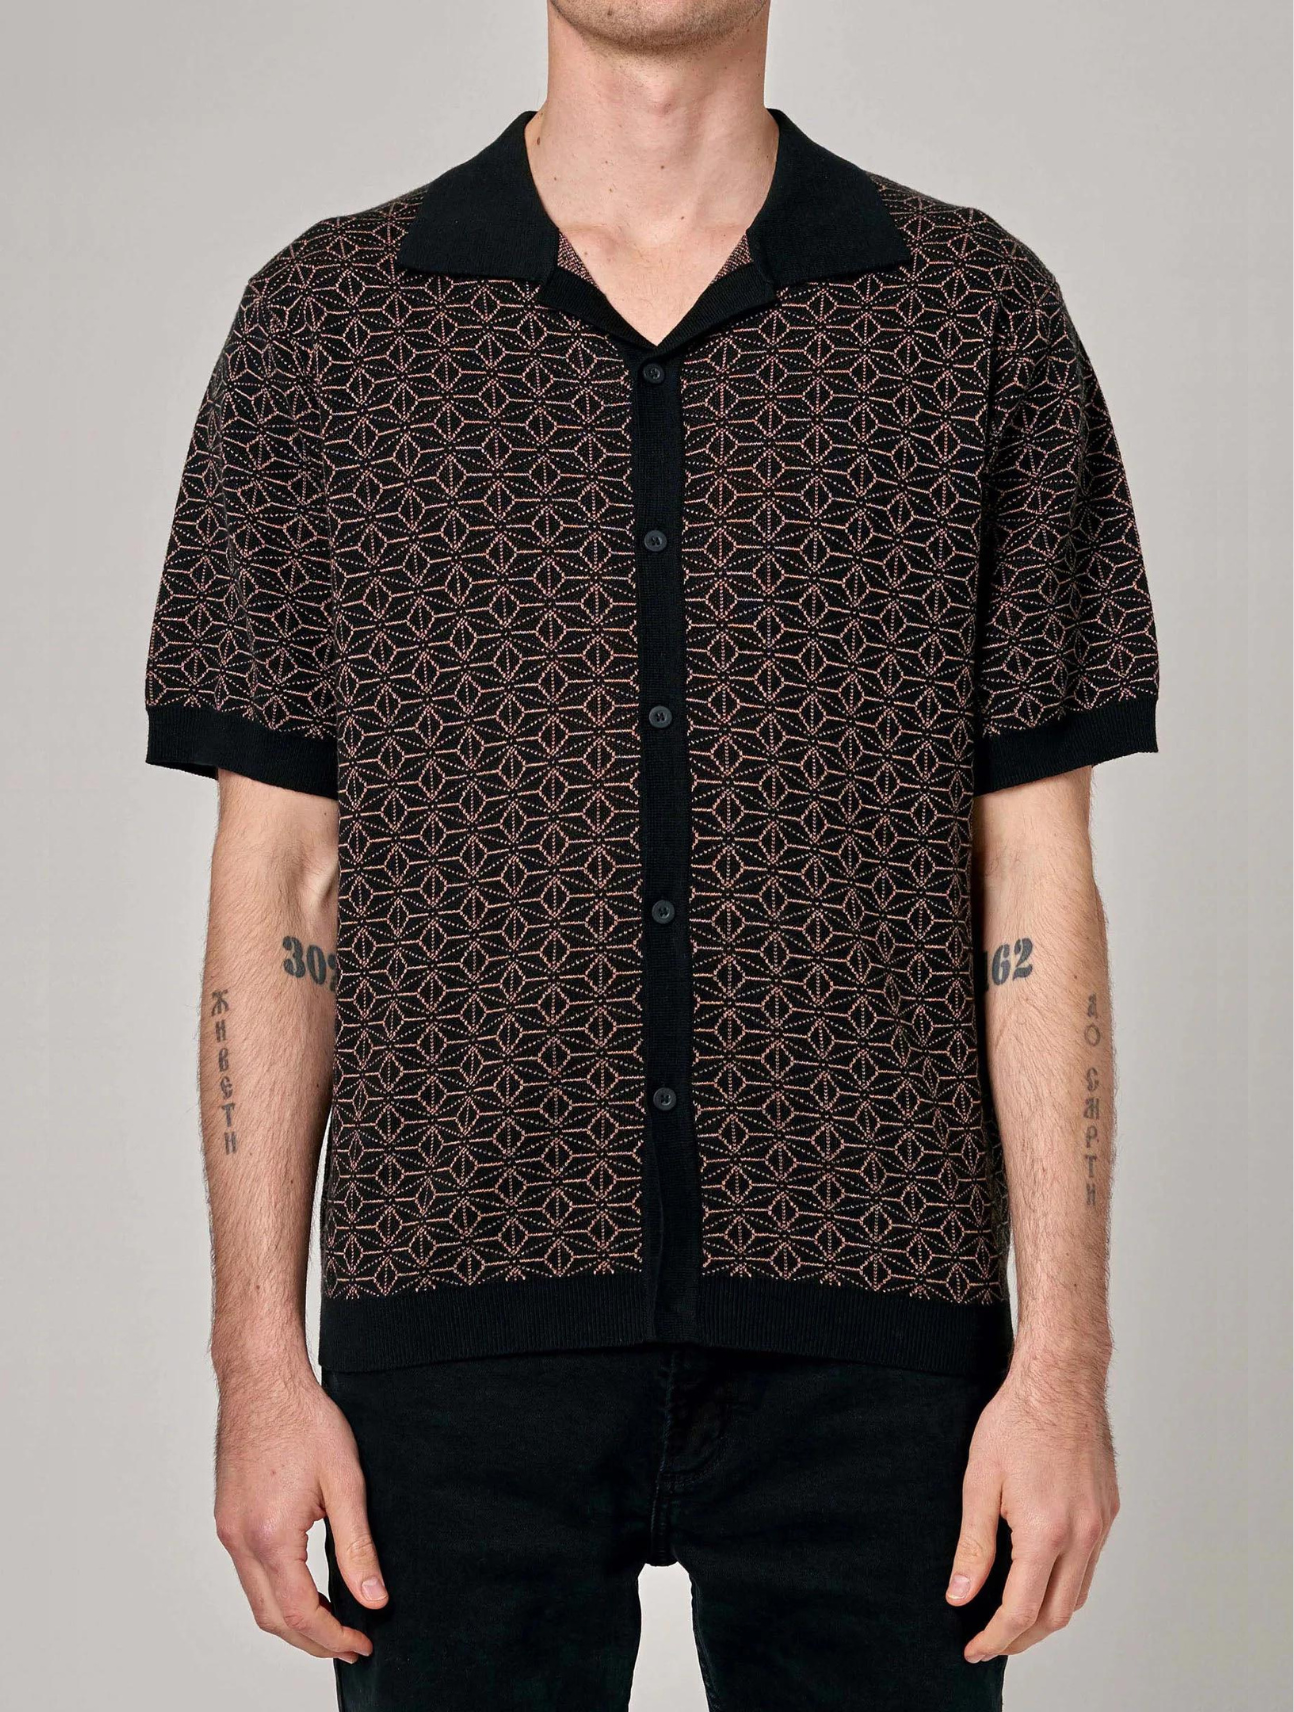 Bowler Pattern Knit Shirt